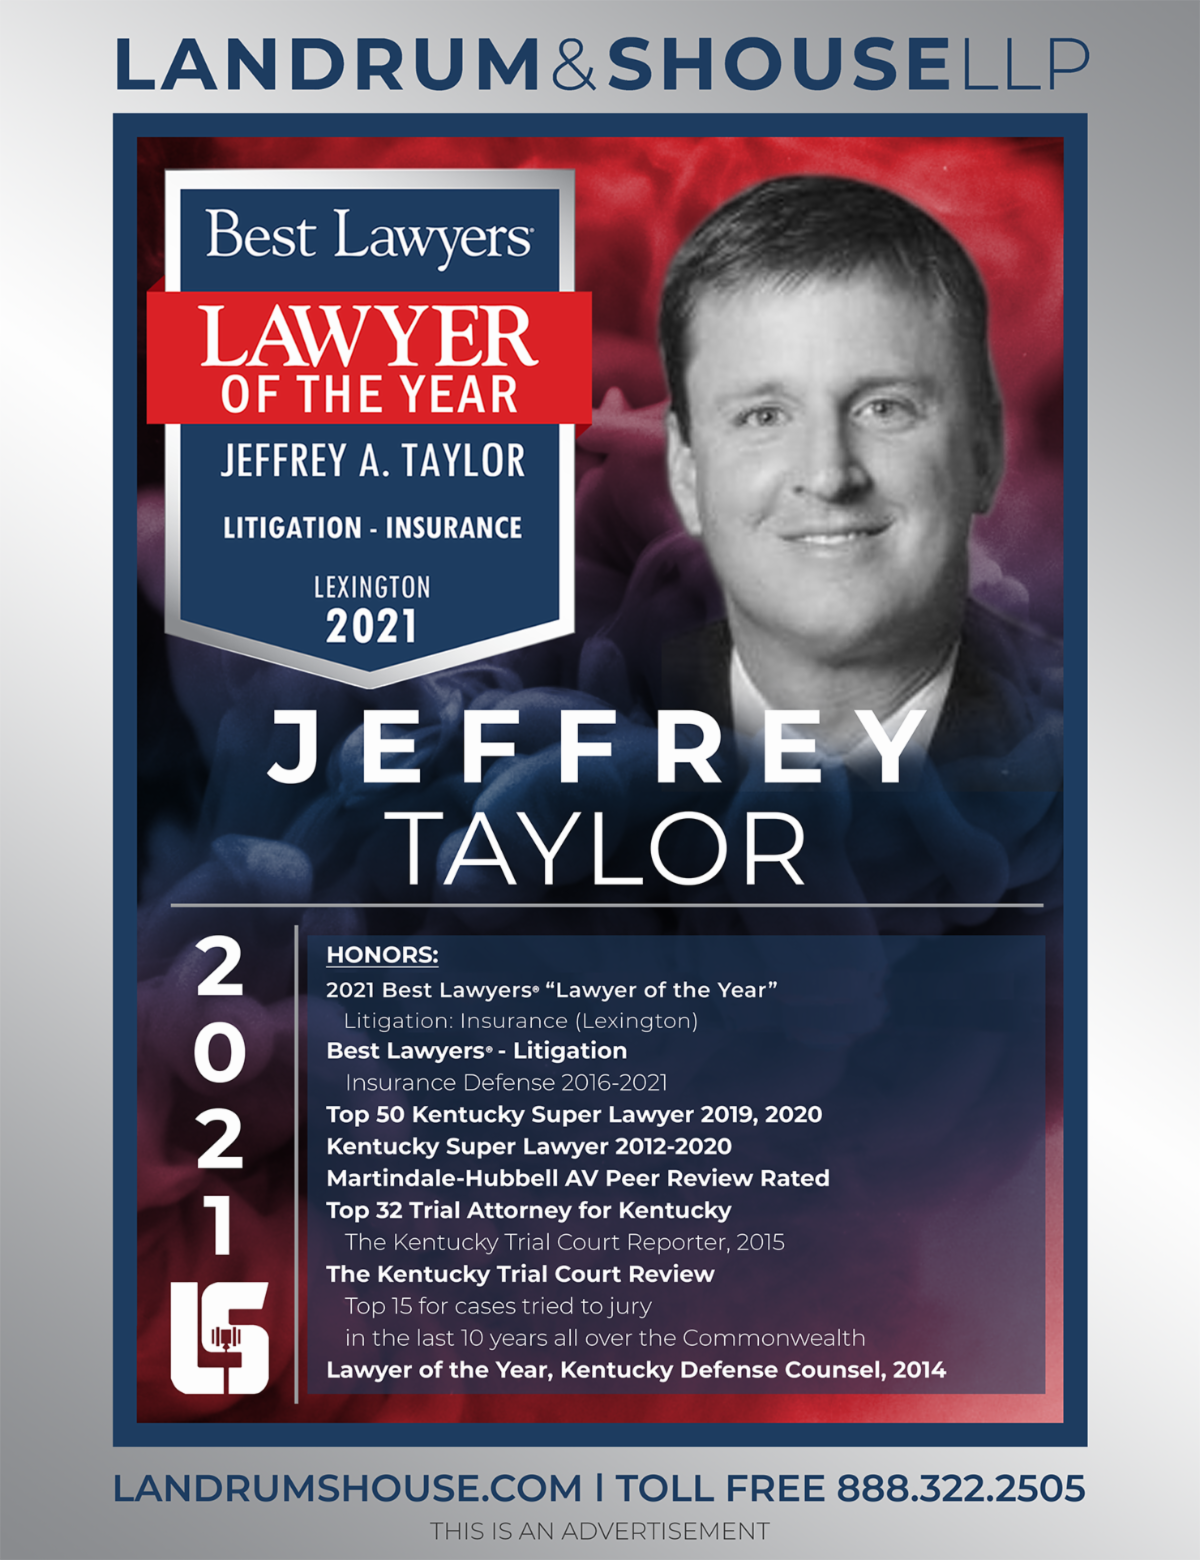 Landrum & Shouse LLP | Best Lawyers Lawyer of the Year Jeffrey A. Taylor | Litigation - Insurance | Lexington 2021